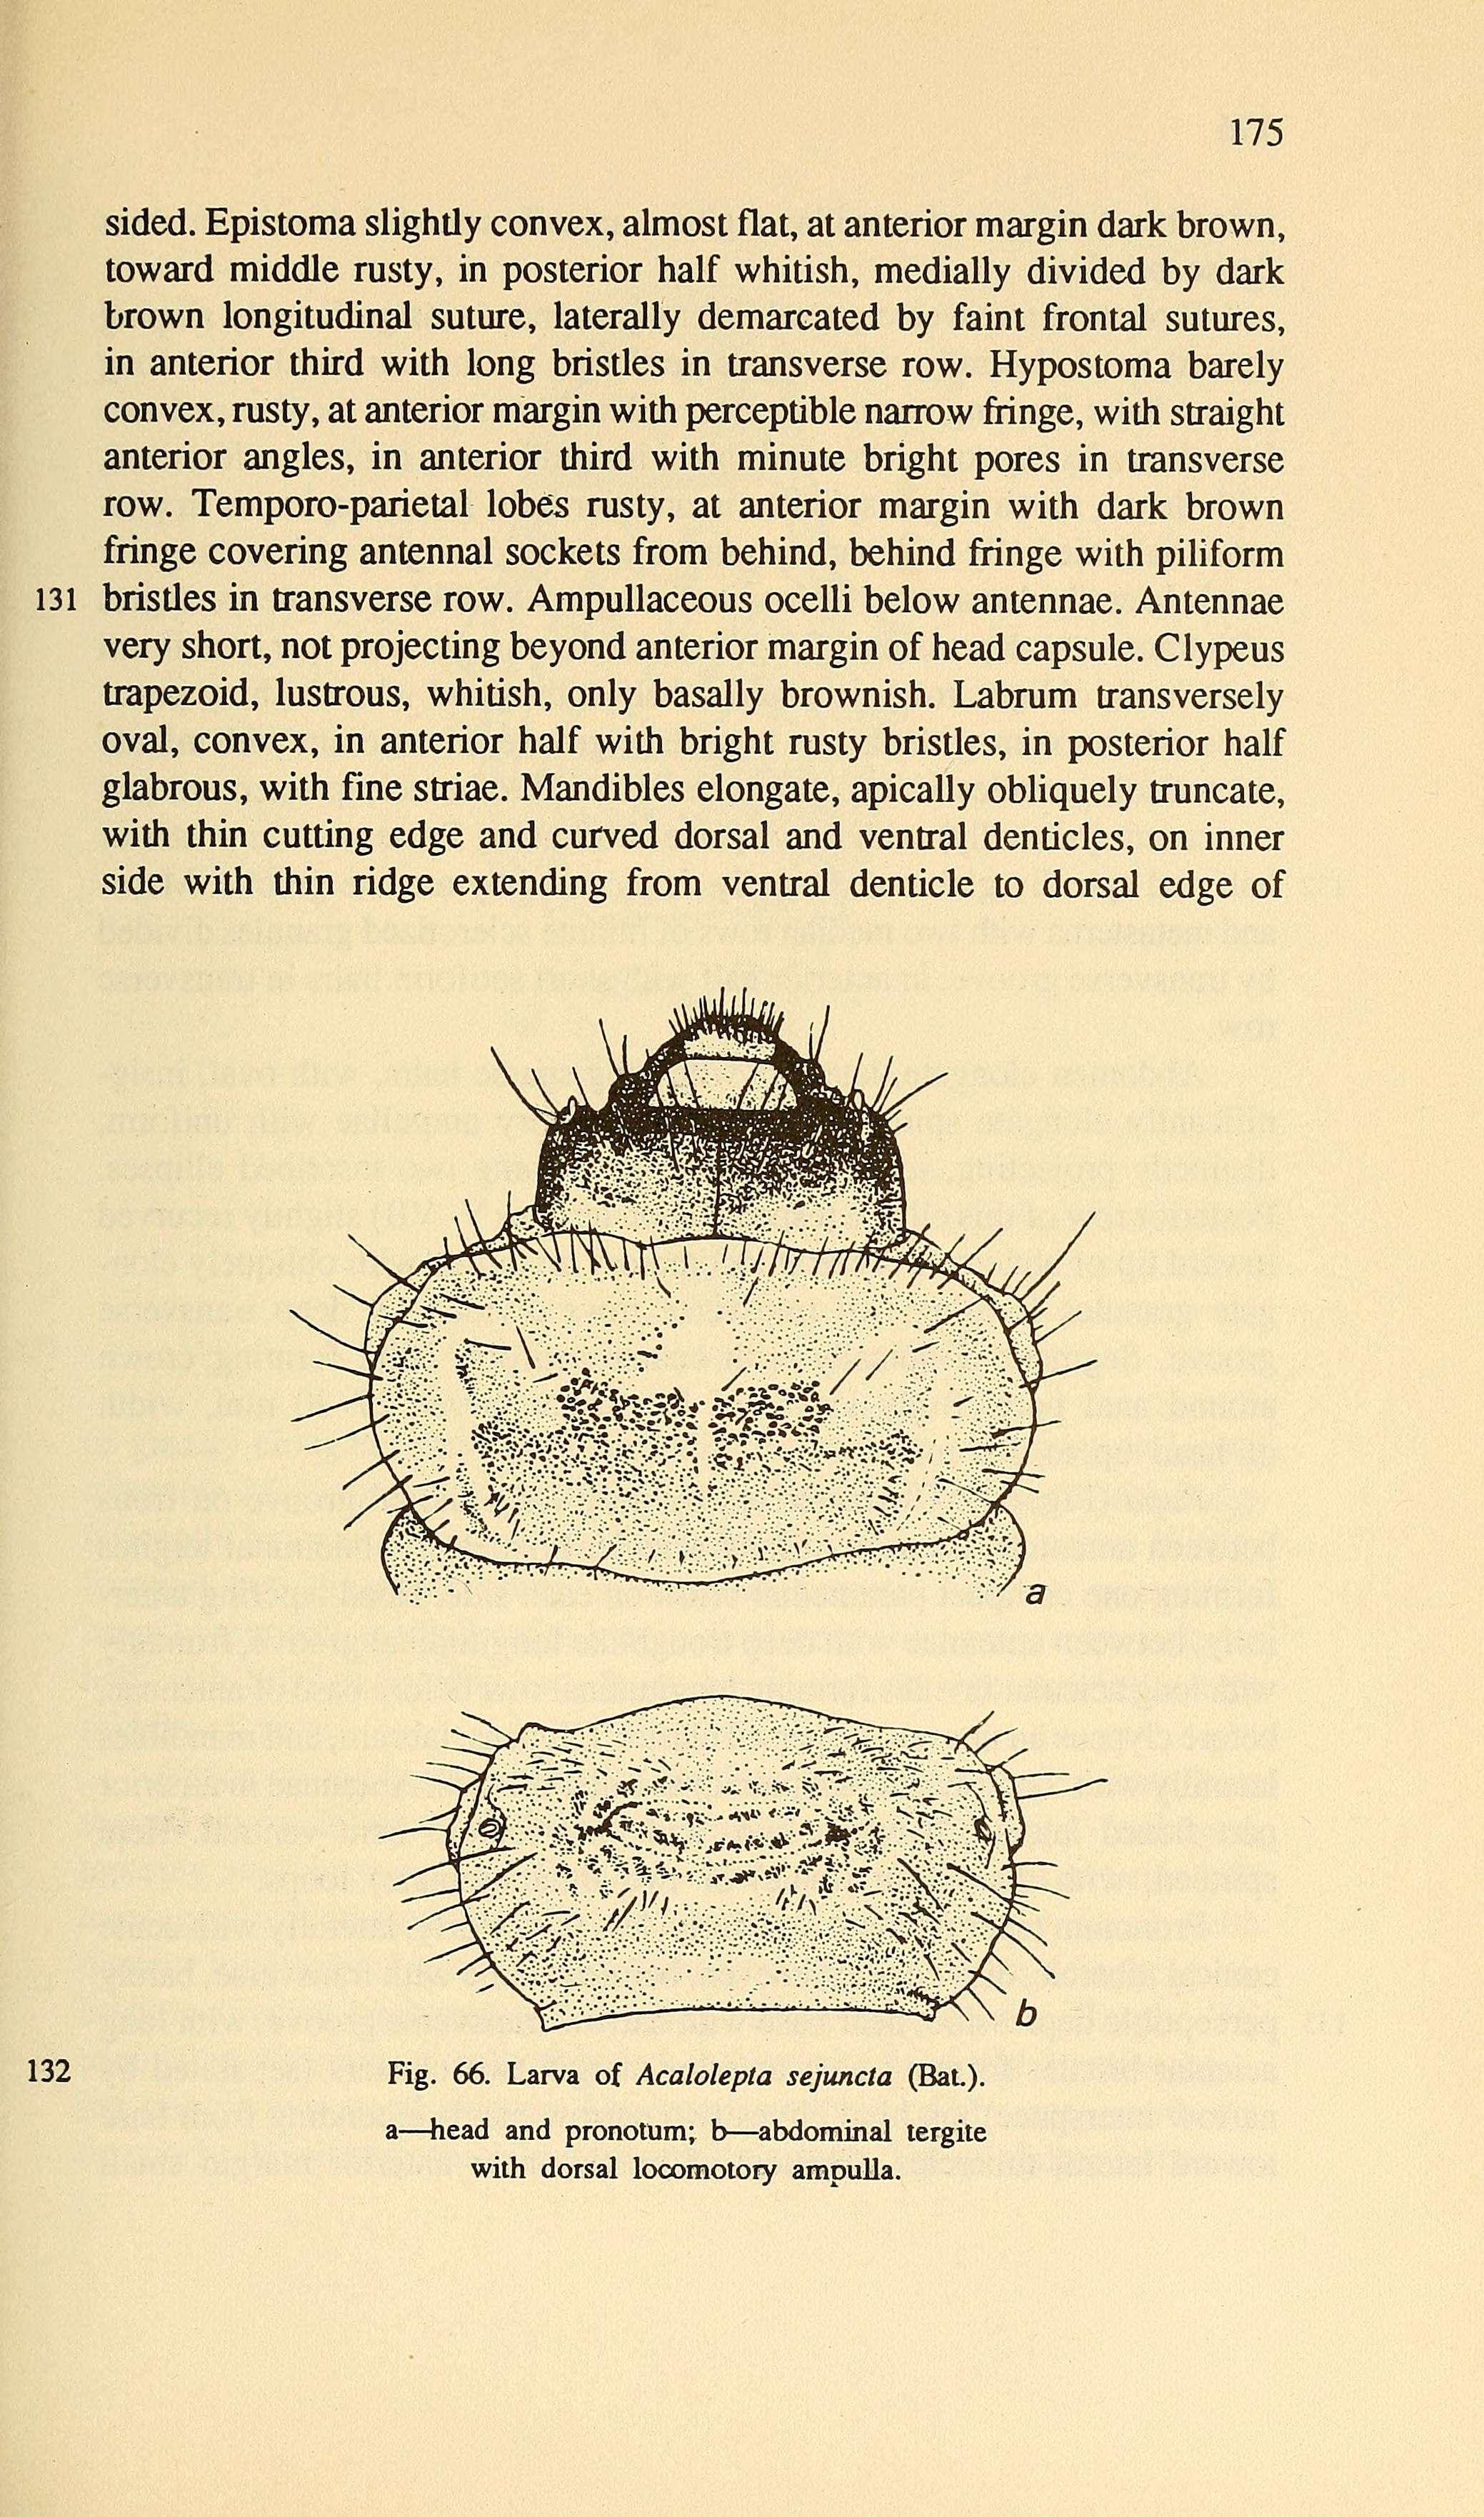 Image of Acalolepta sejuncta Bates 1873